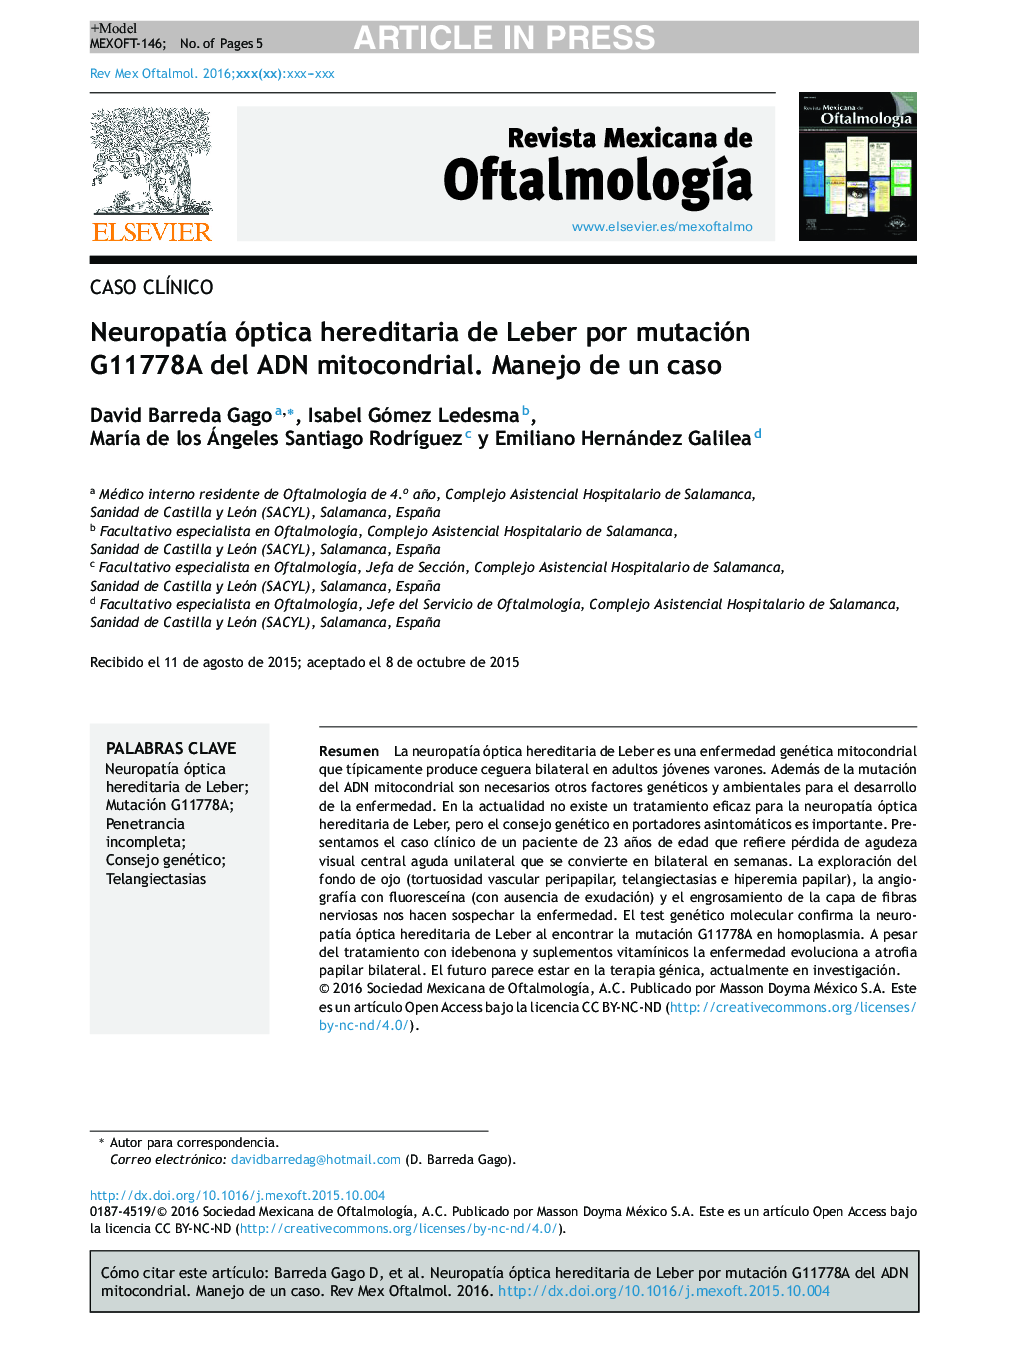 NeuropatÃ­a óptica hereditaria de Leber por mutación G11778A del ADN mitocondrial. Manejo de un caso